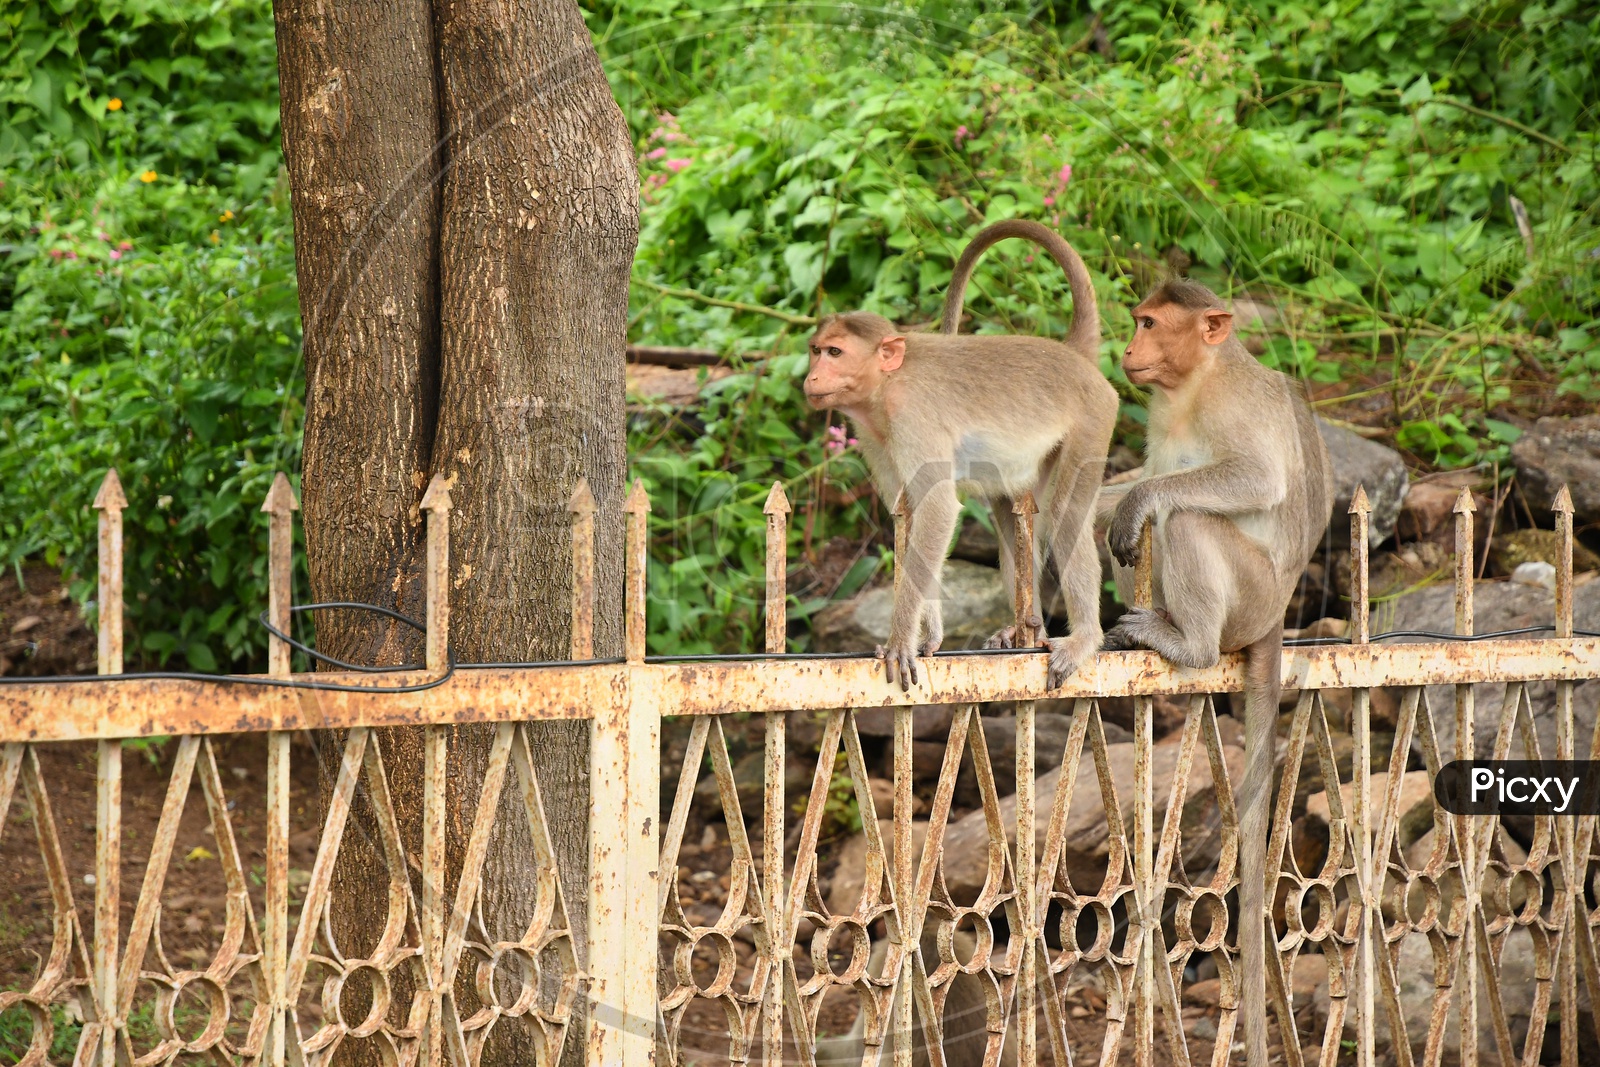 Two Monkeys sitting on the Iron Gate